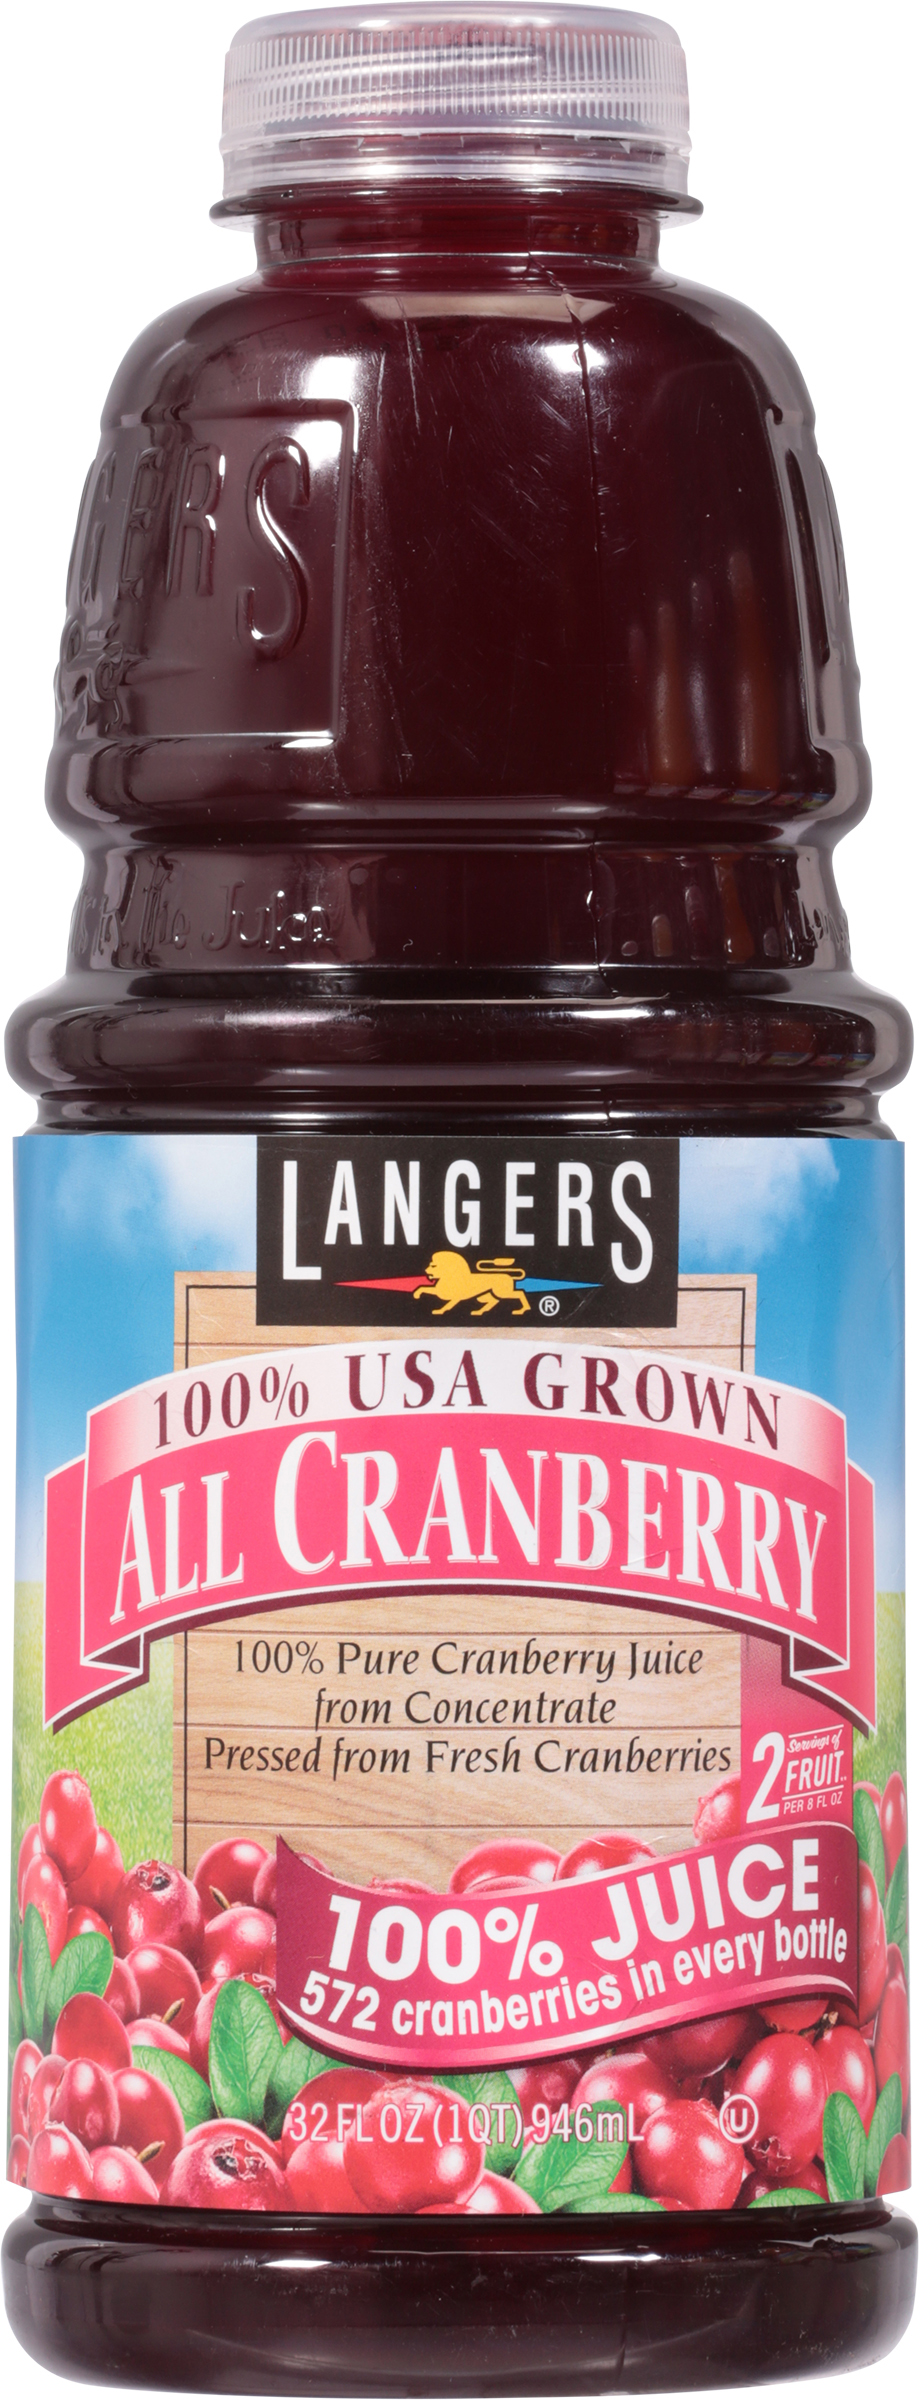 100% Juice, All Cranberry image